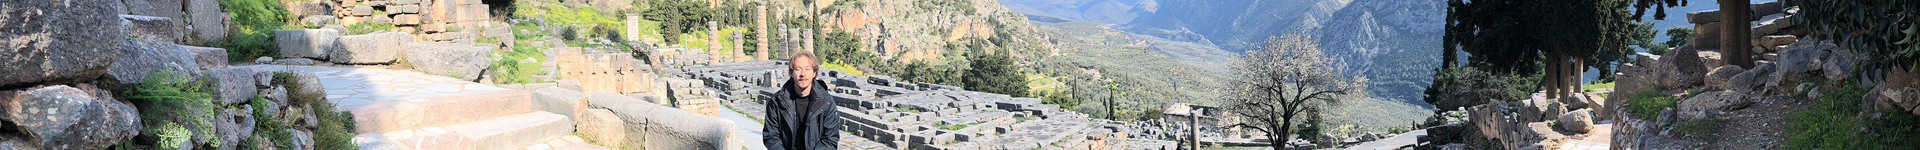 Oracle of Delphi - Delphi, Greece